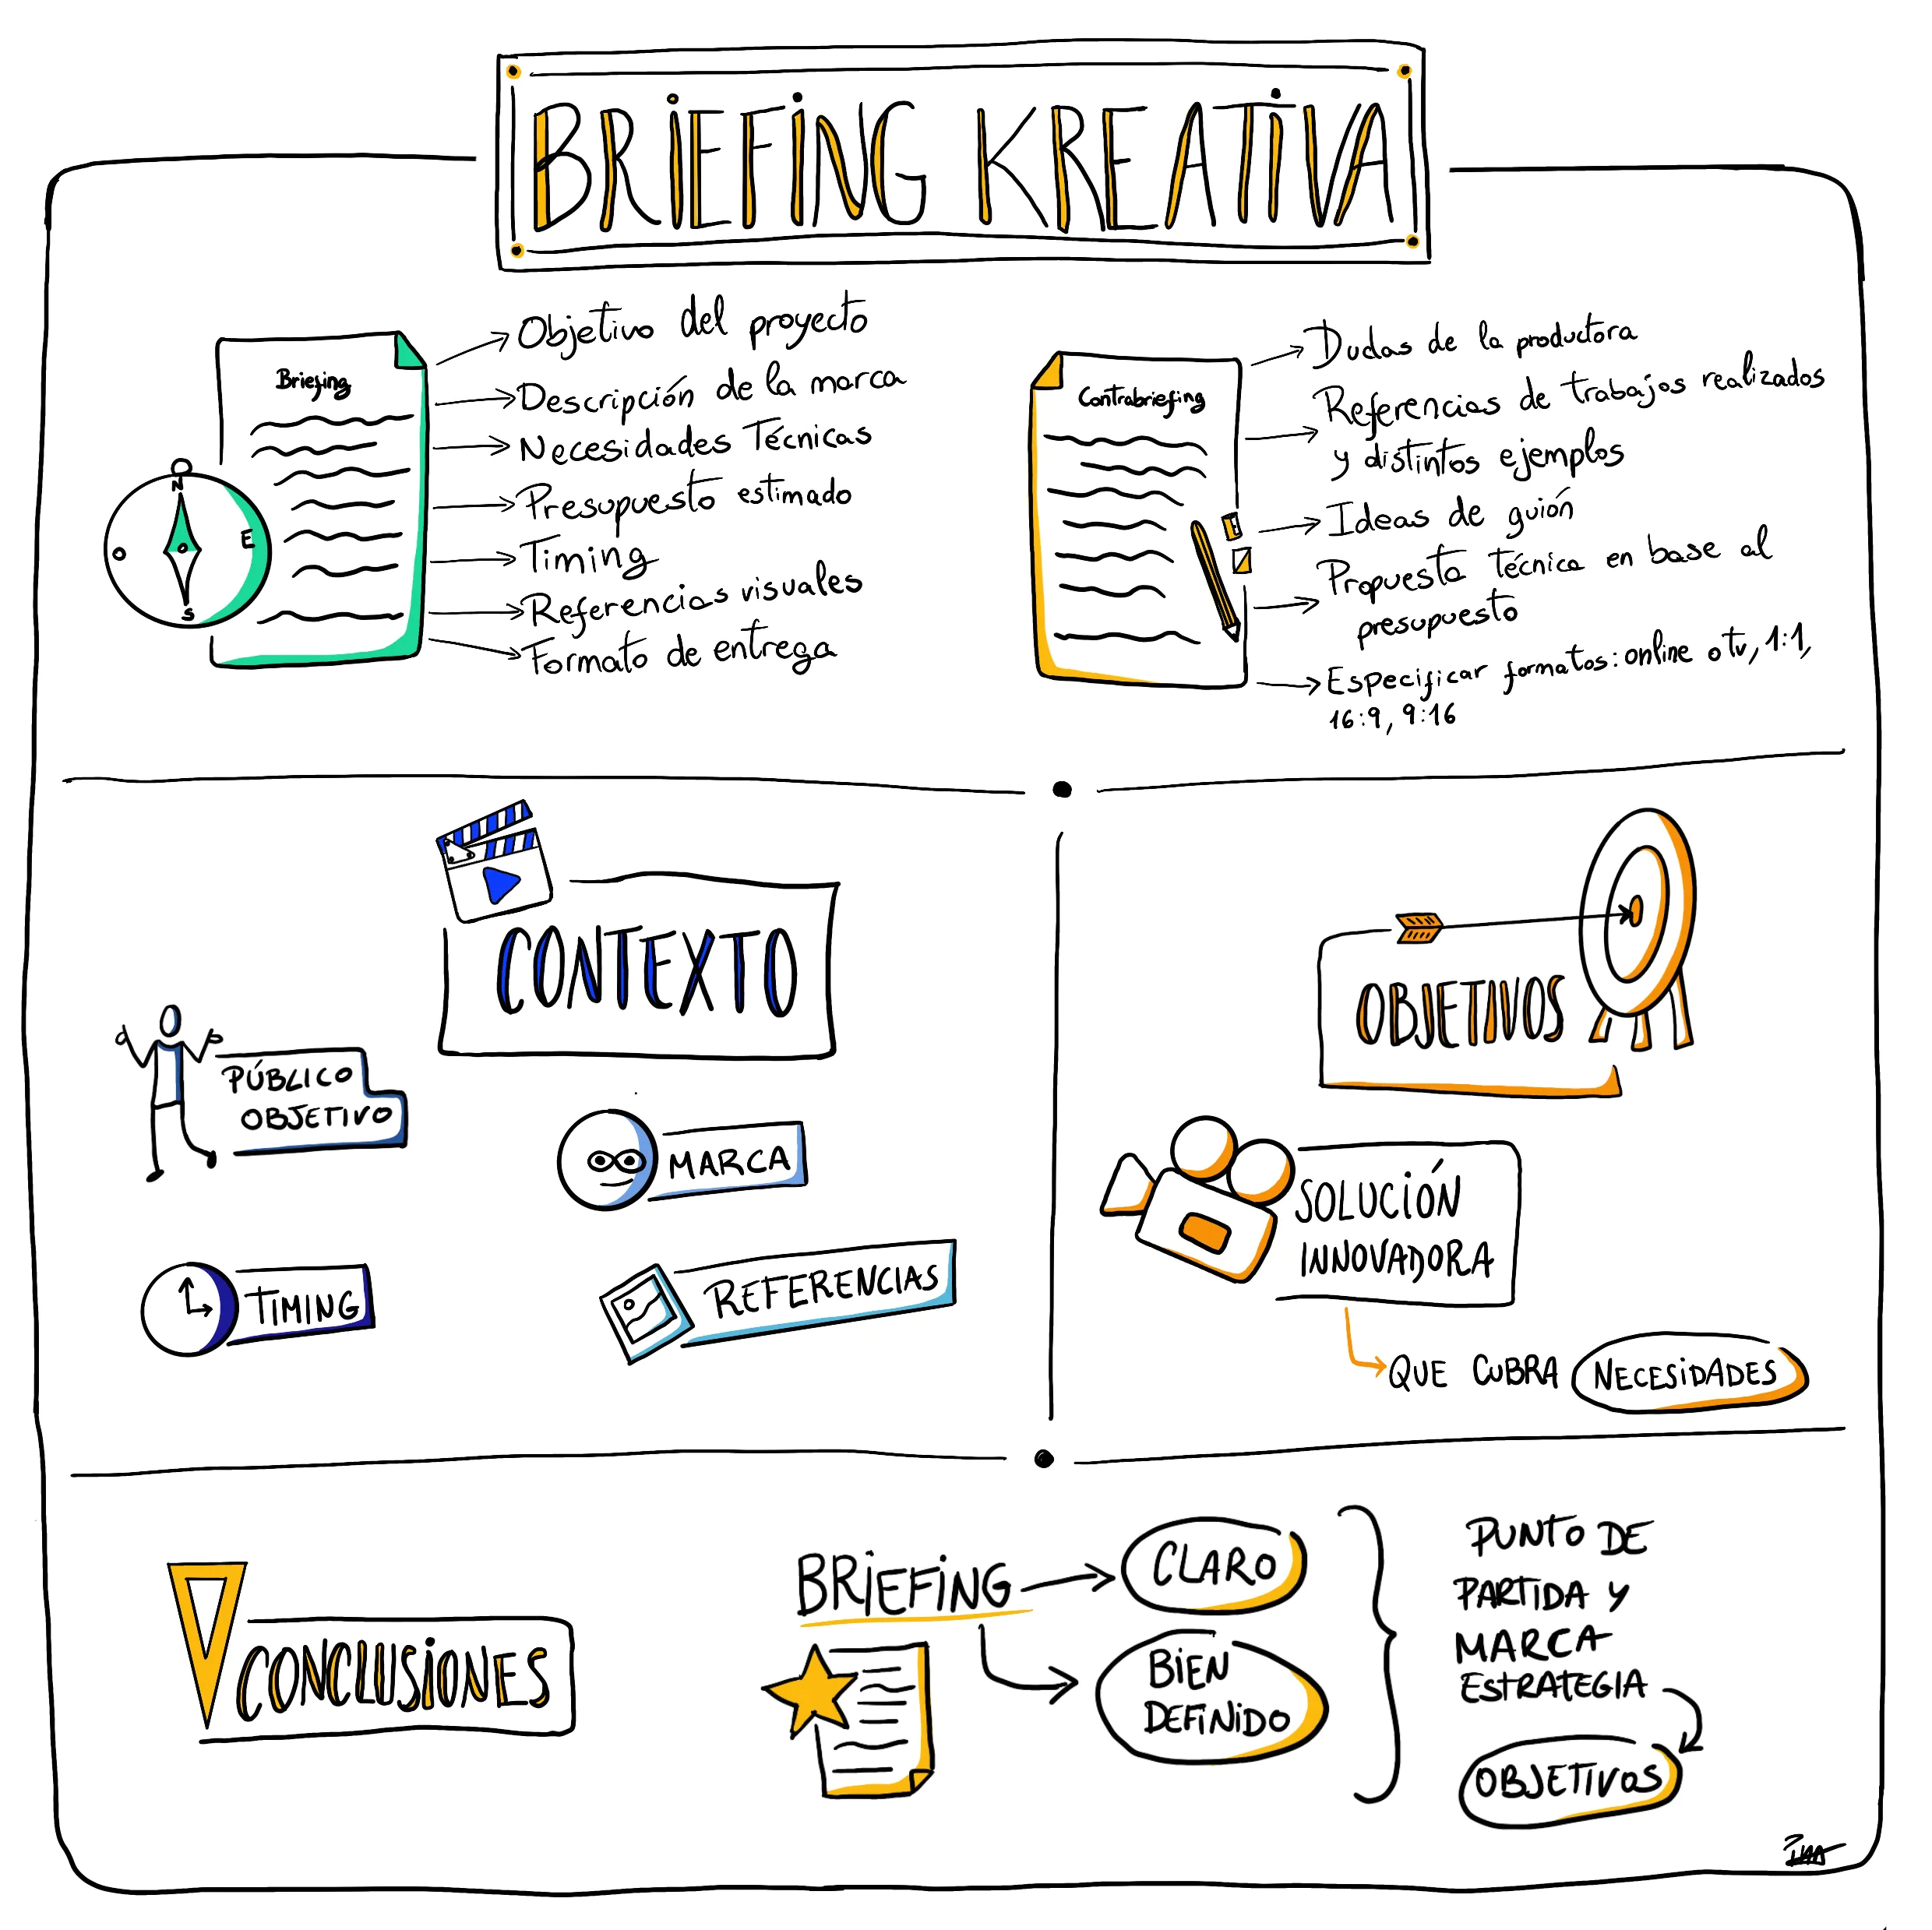 Briefing Kreativa